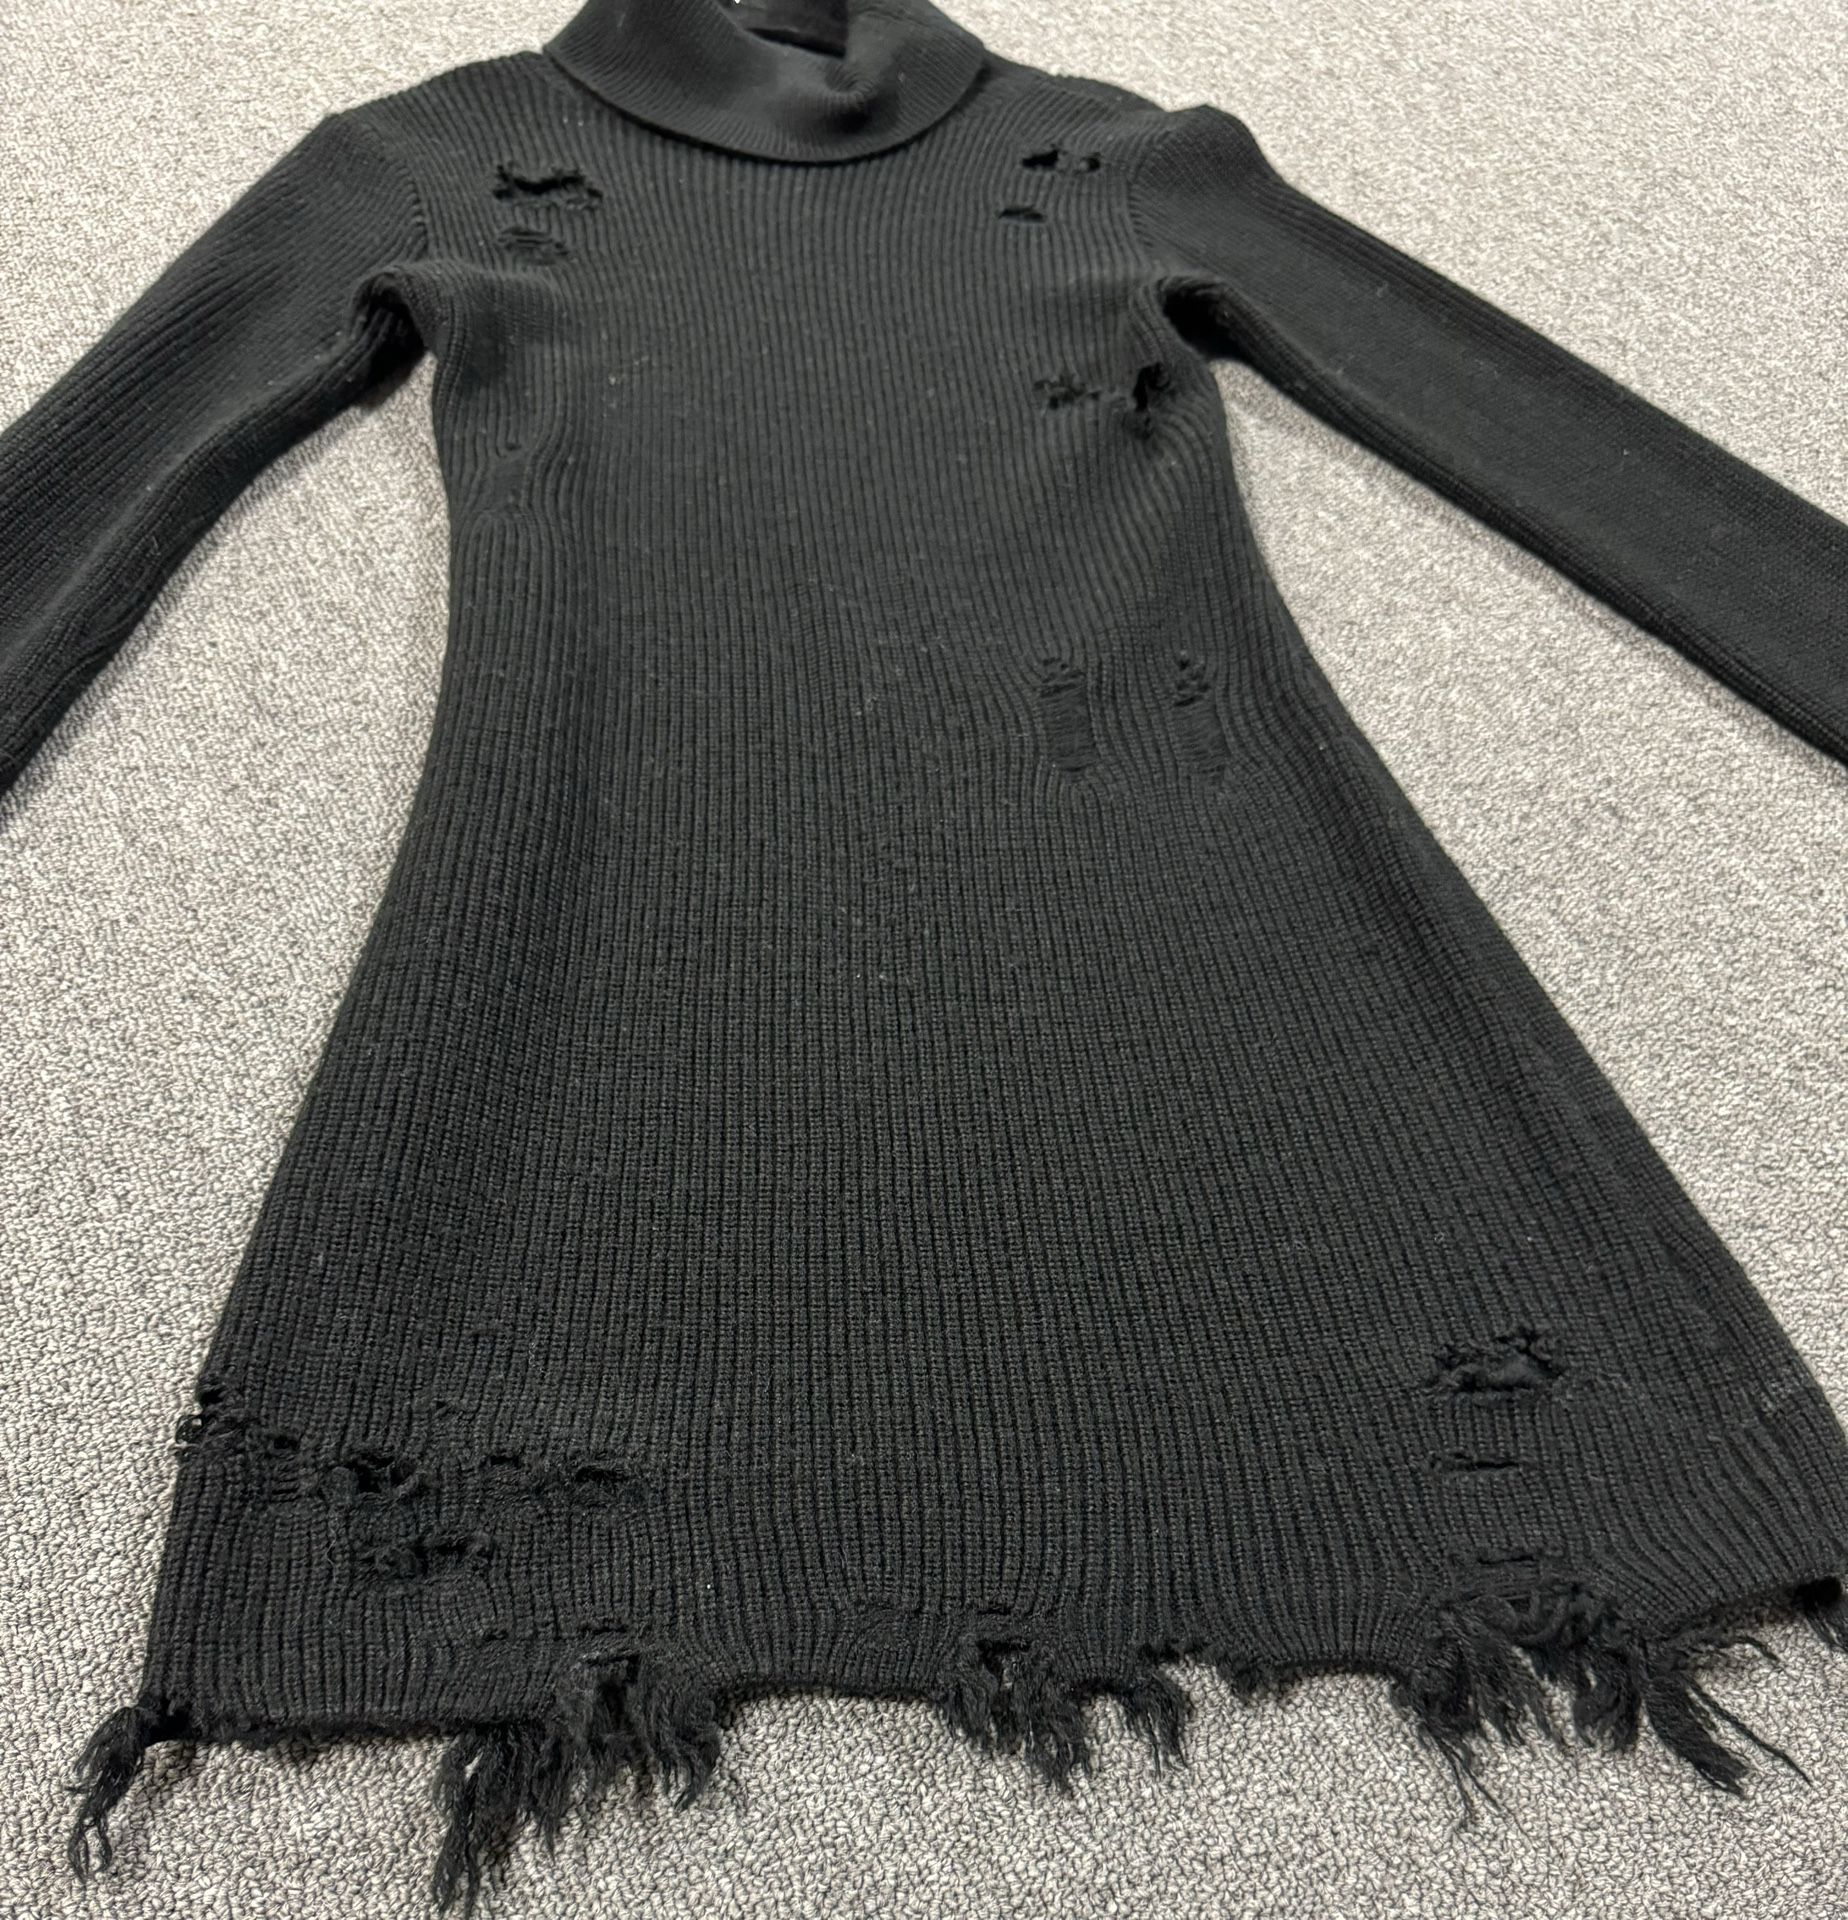 Black Distressed Turtle Neck Sweater Dress 